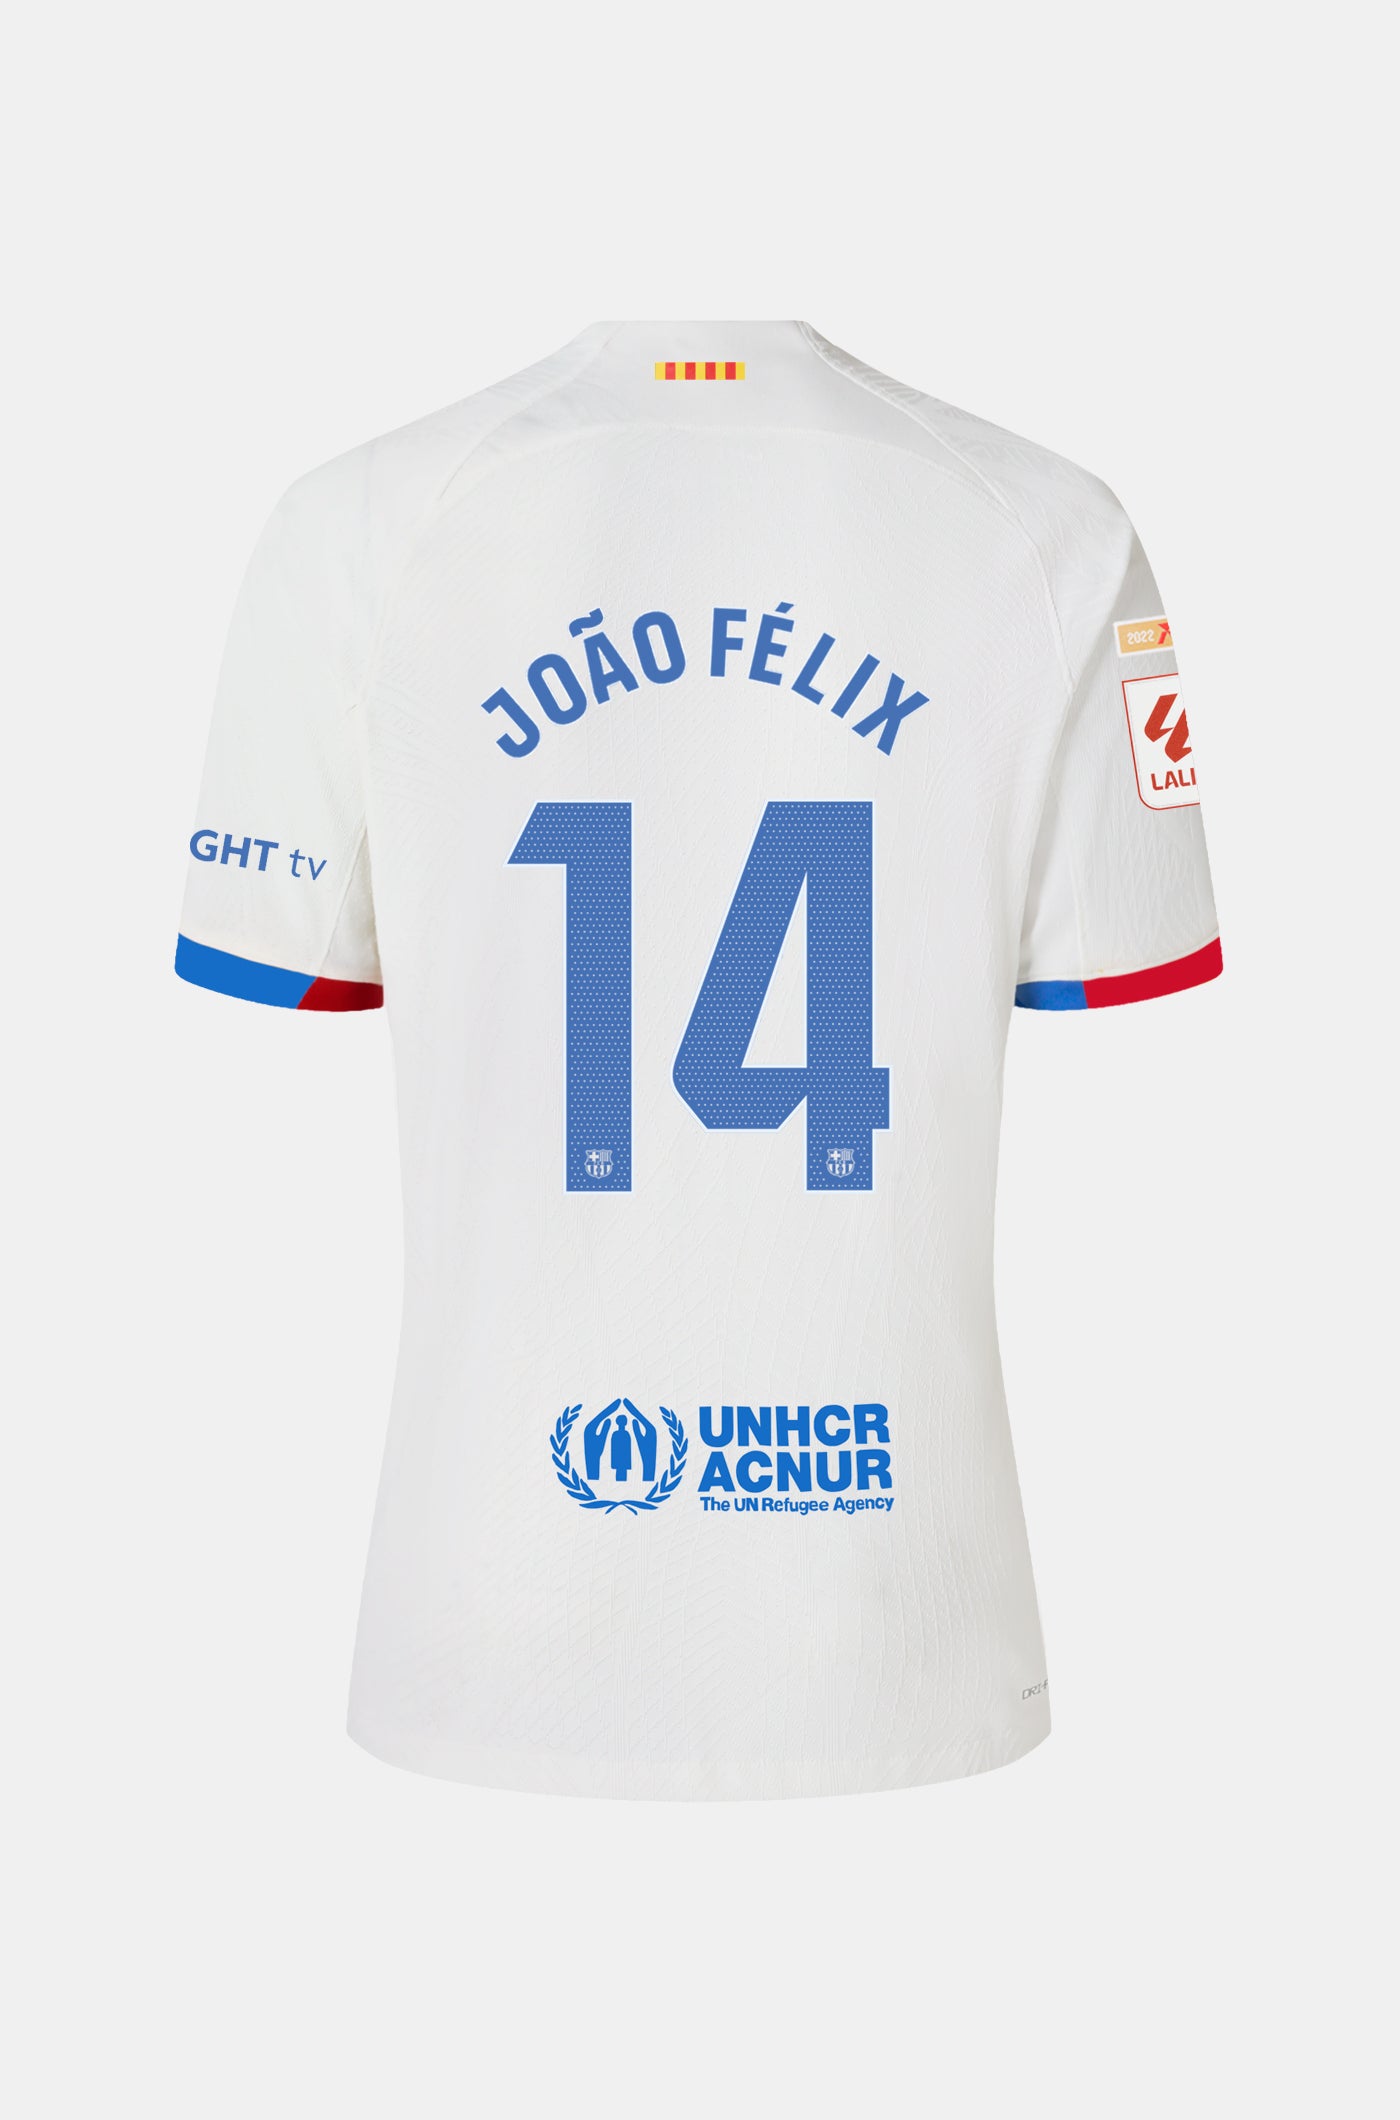 LFP FC Barcelona away shirt 23/24 Player’s Edition  - JOÃO FELIX